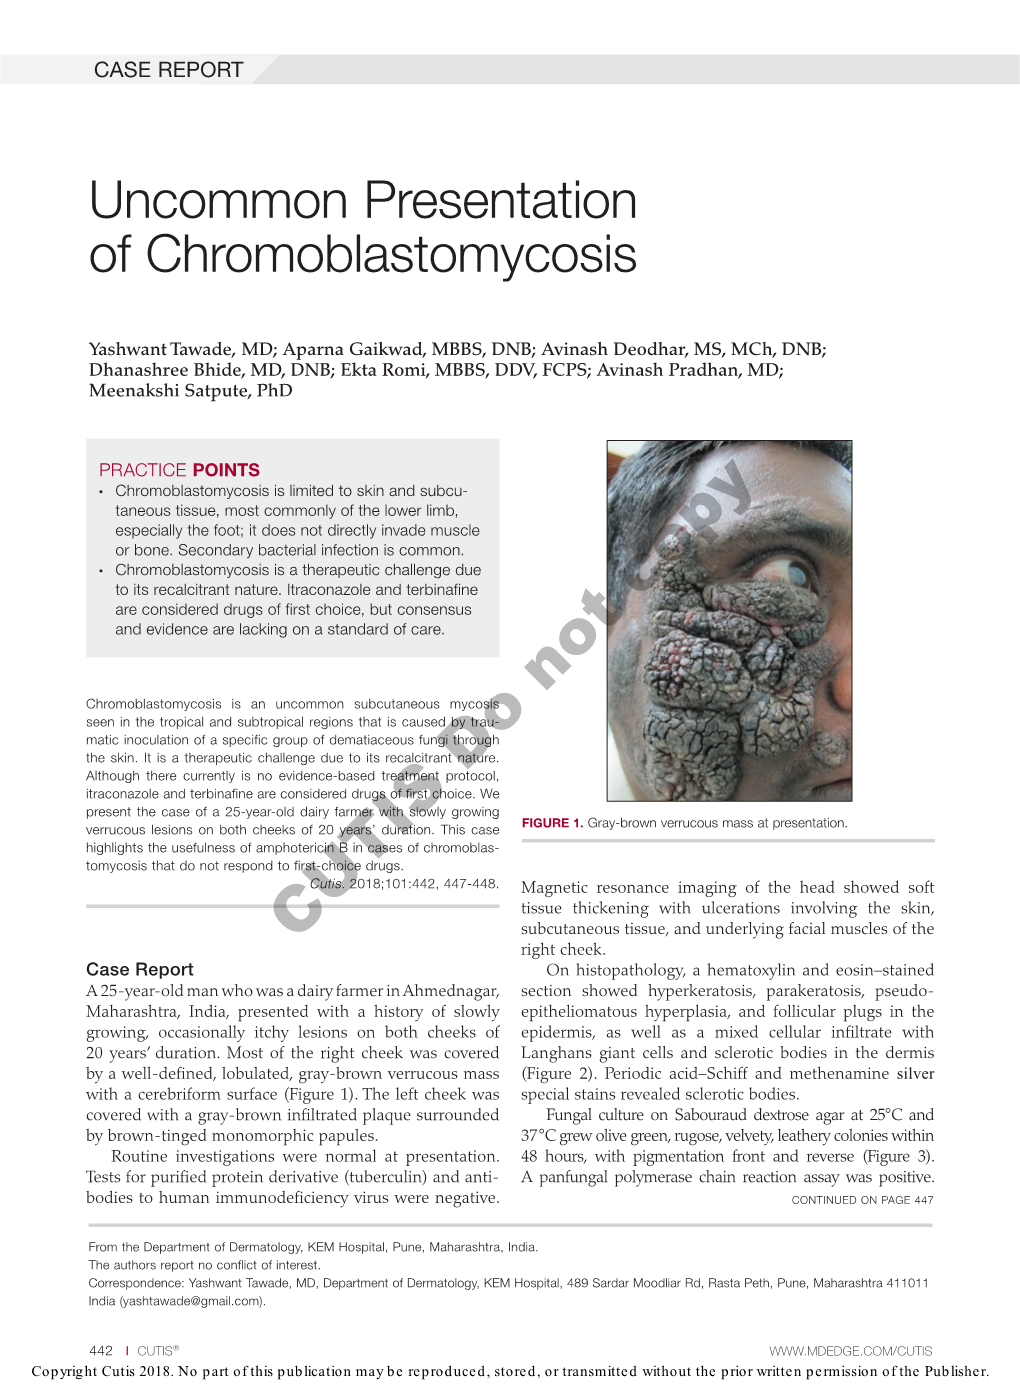 Uncommon Presentation of Chromoblastomycosis